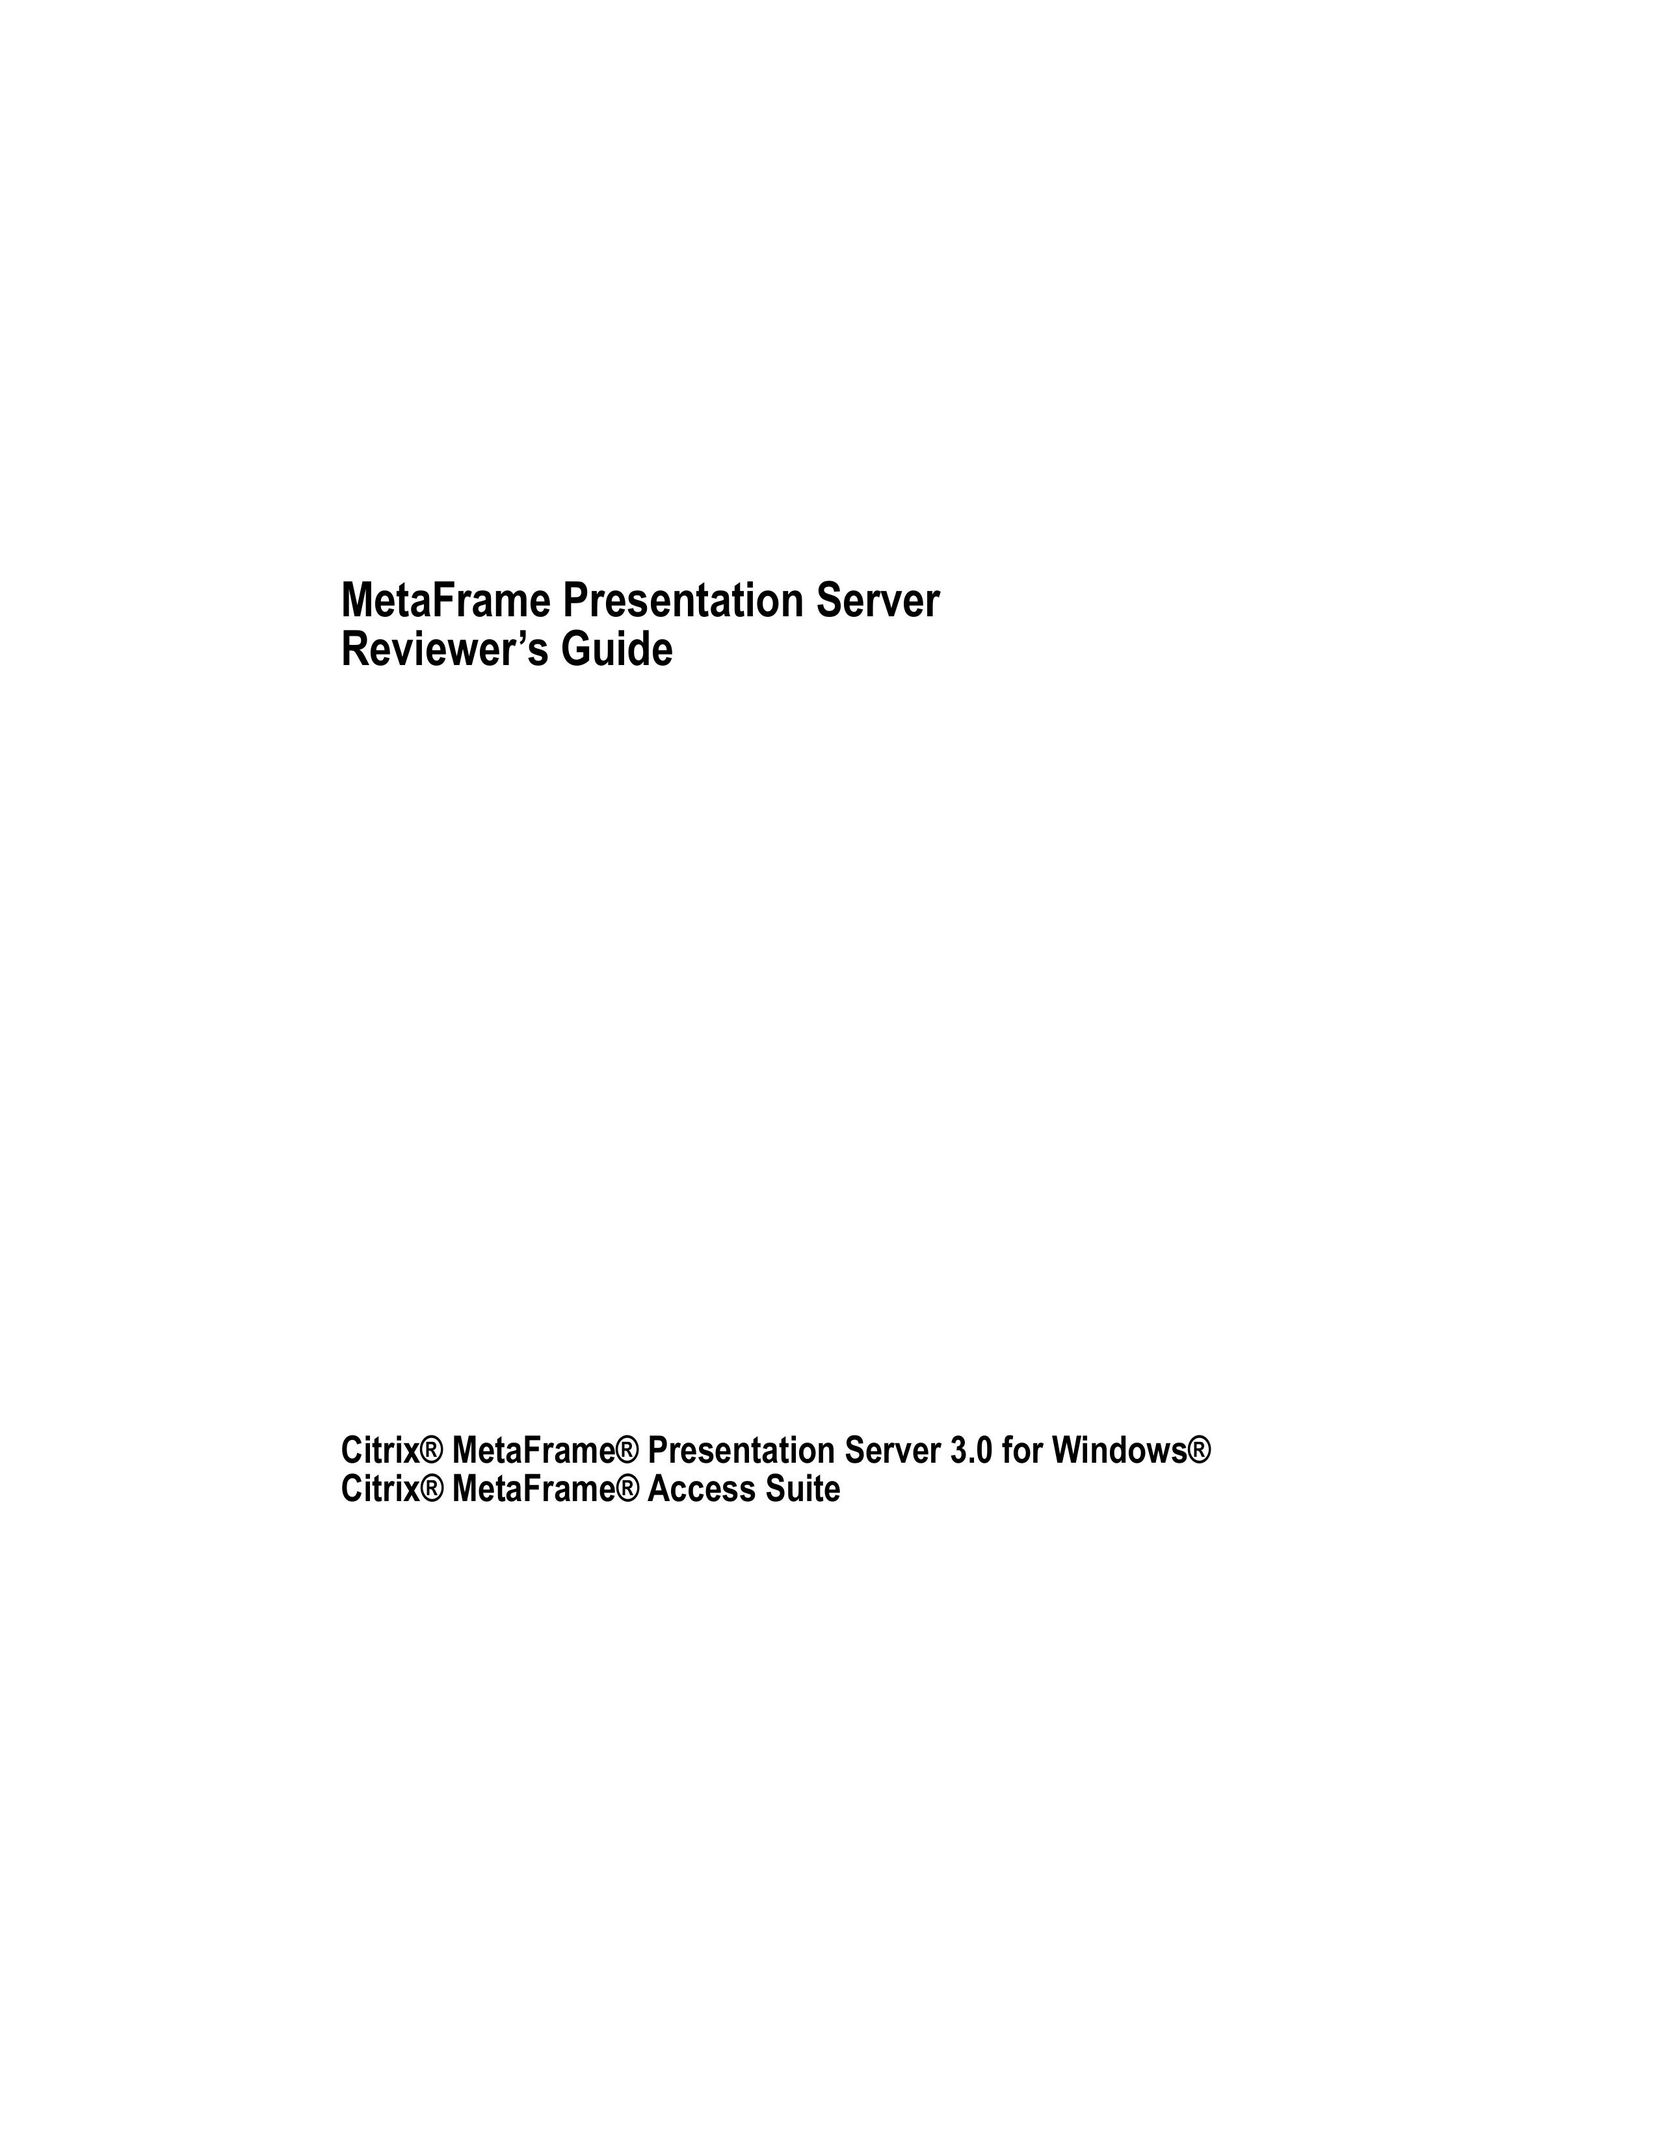 Citrix Systems MetaFrame Presentation Server Server User Manual